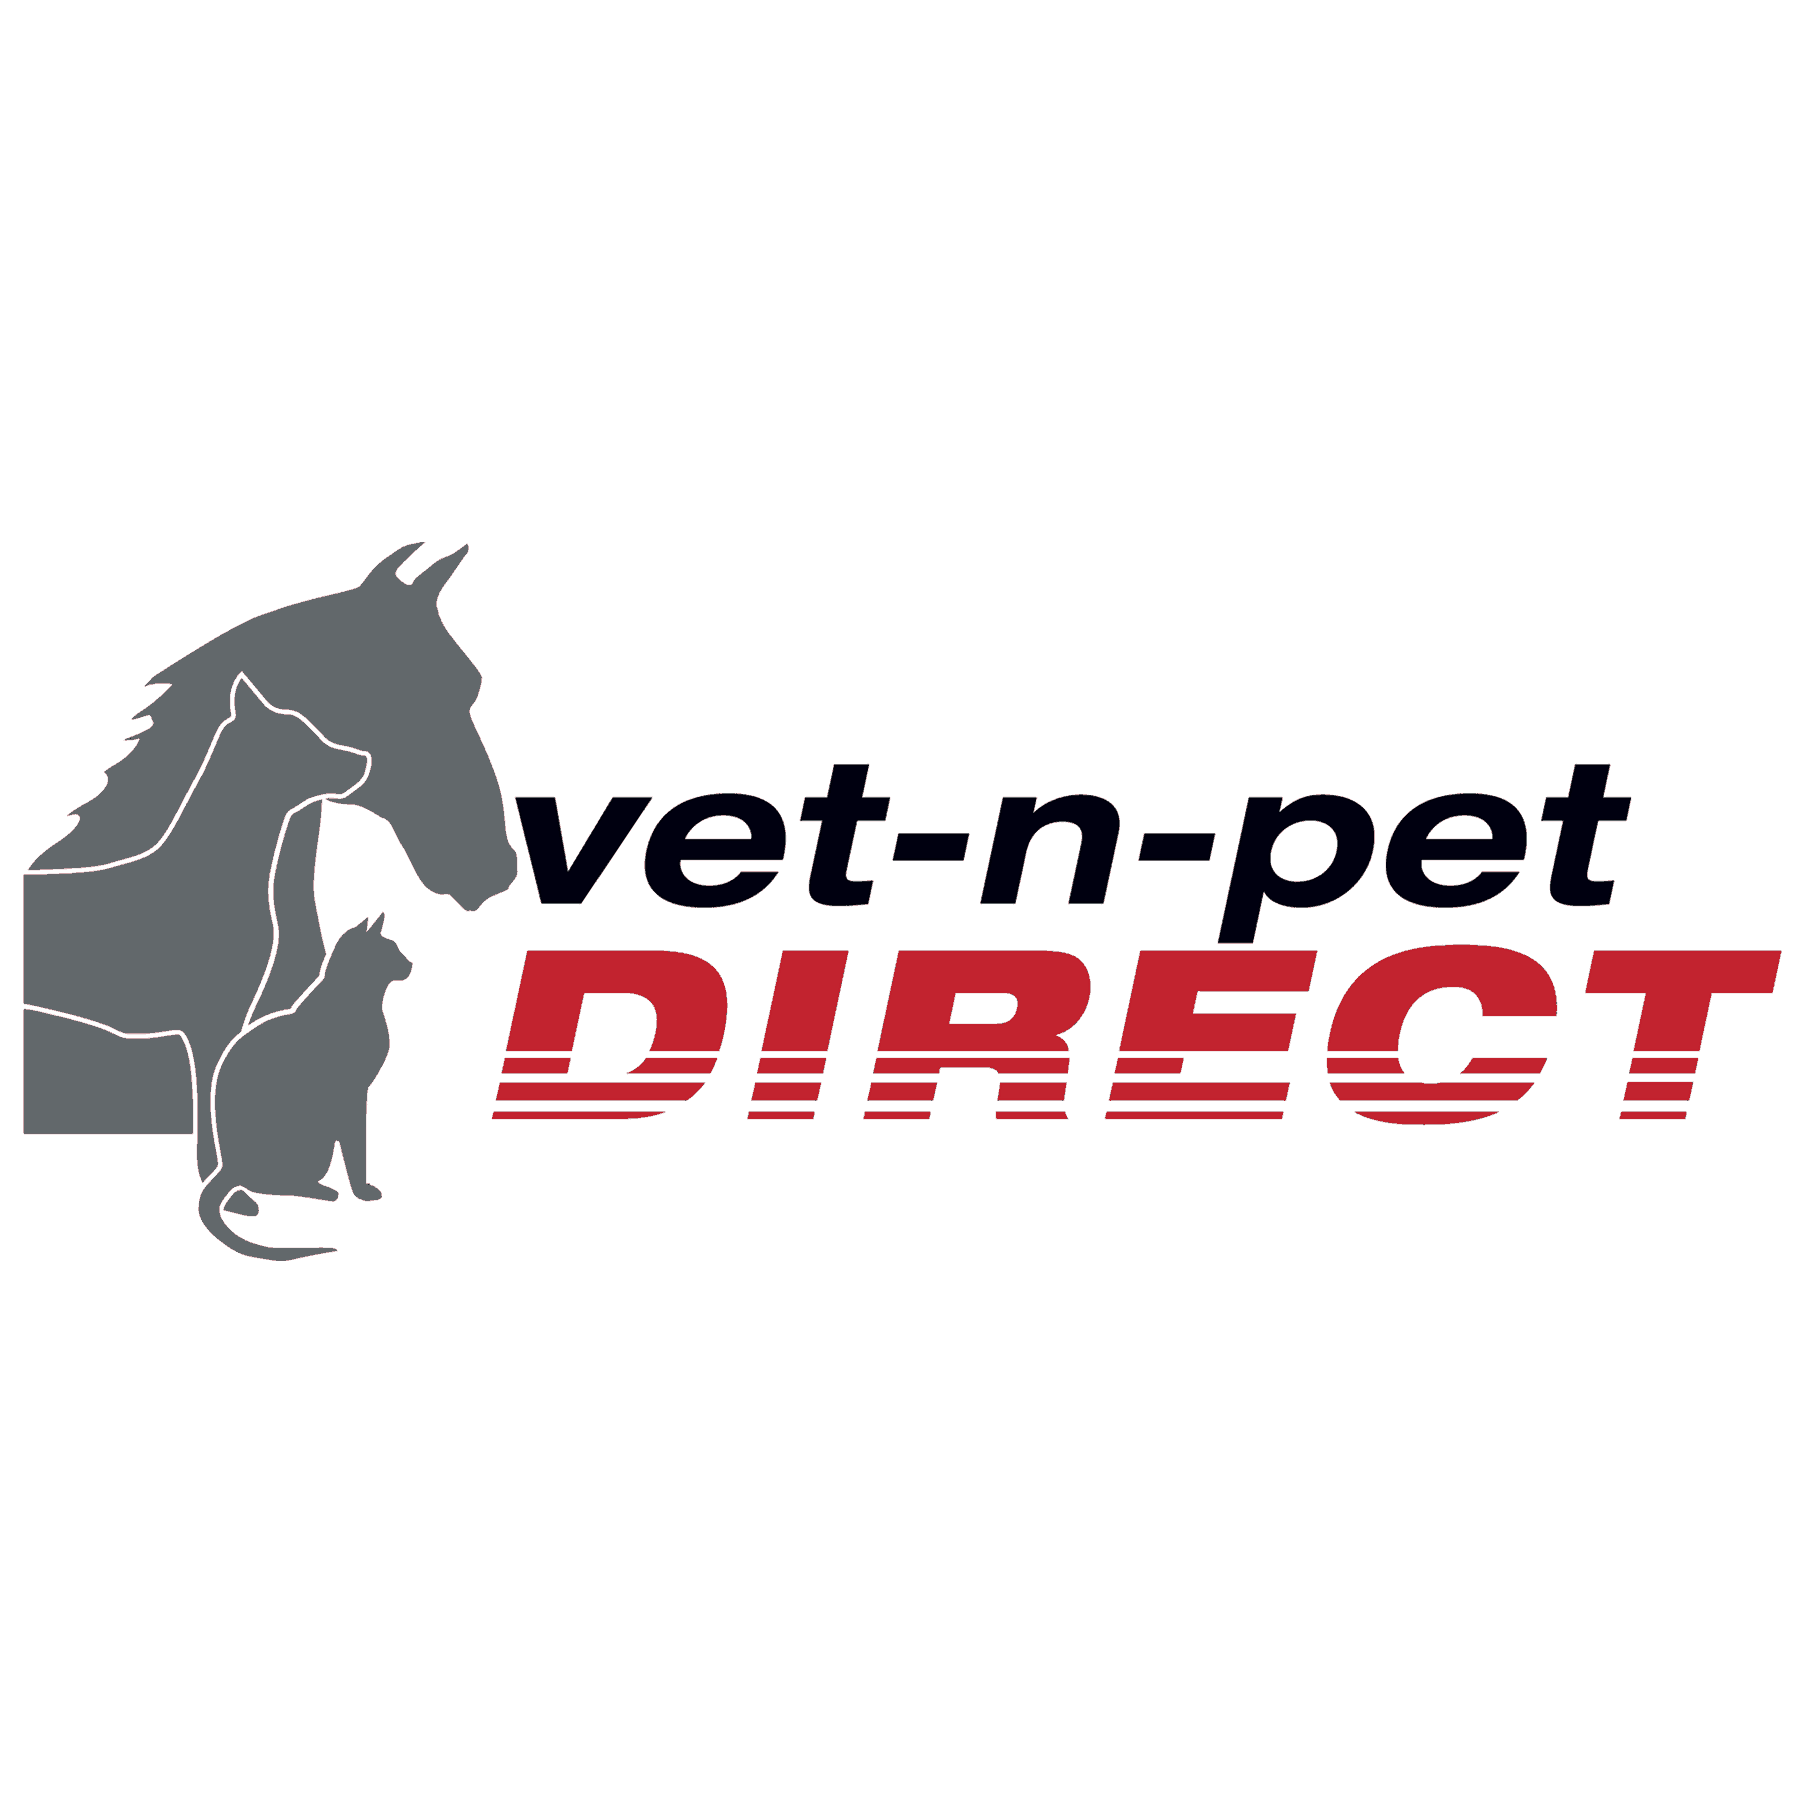 PC Pet логотип. Логотип 1800. Vet Pet logo. ALPOVET логотип. Pet n pet